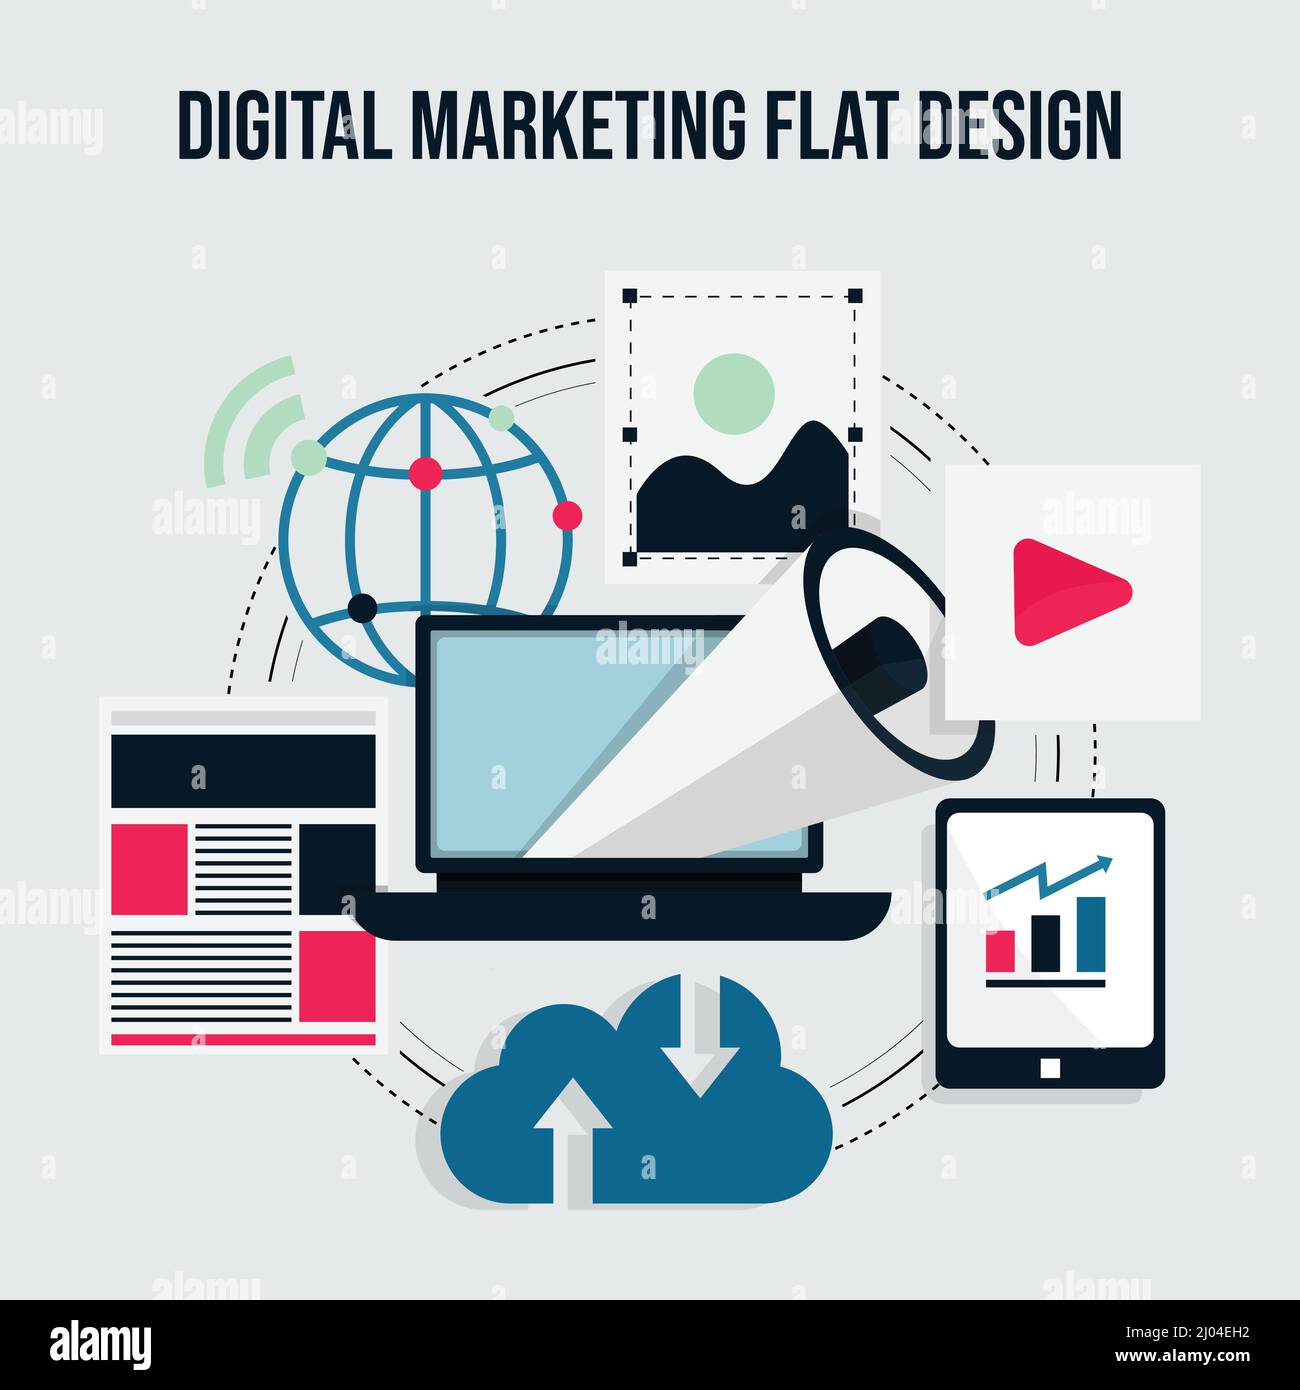 Digital marketing concept flat design vector image. Content marketing, promotion, sharing, strategy, digital marketing, web advertising concept Stock Vector